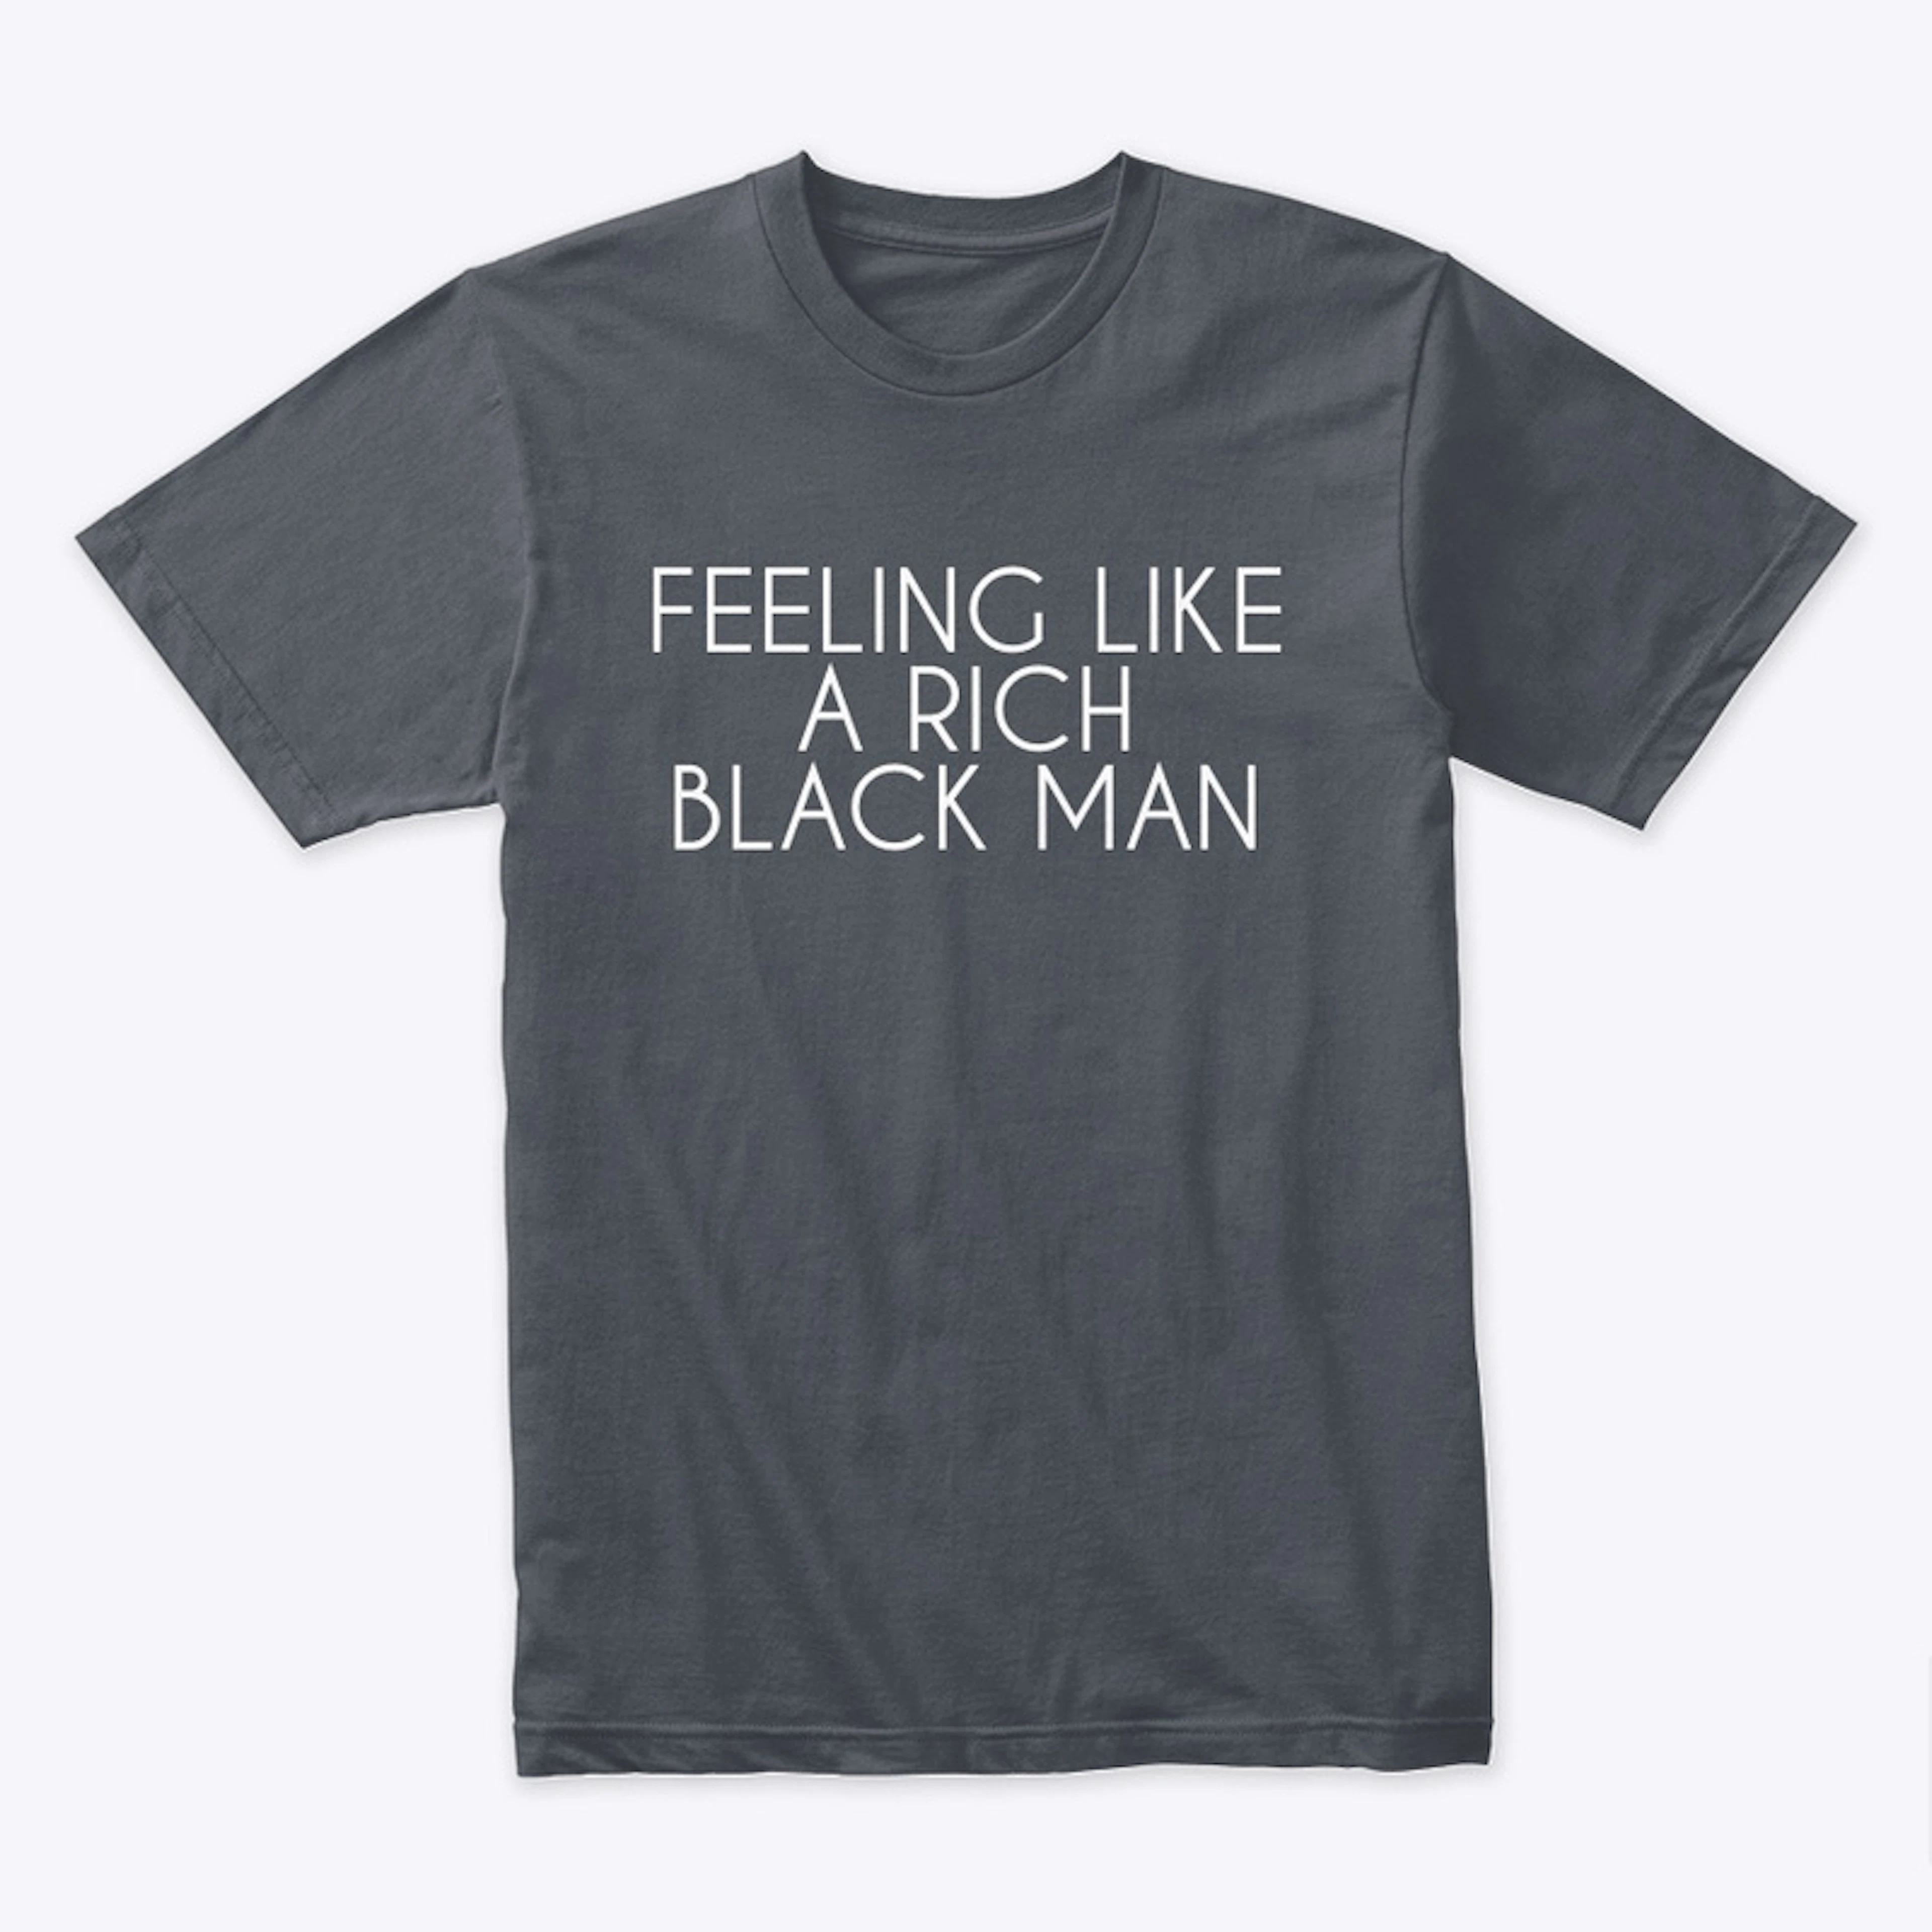 FEELING LIKE A RICH BLACK MAN